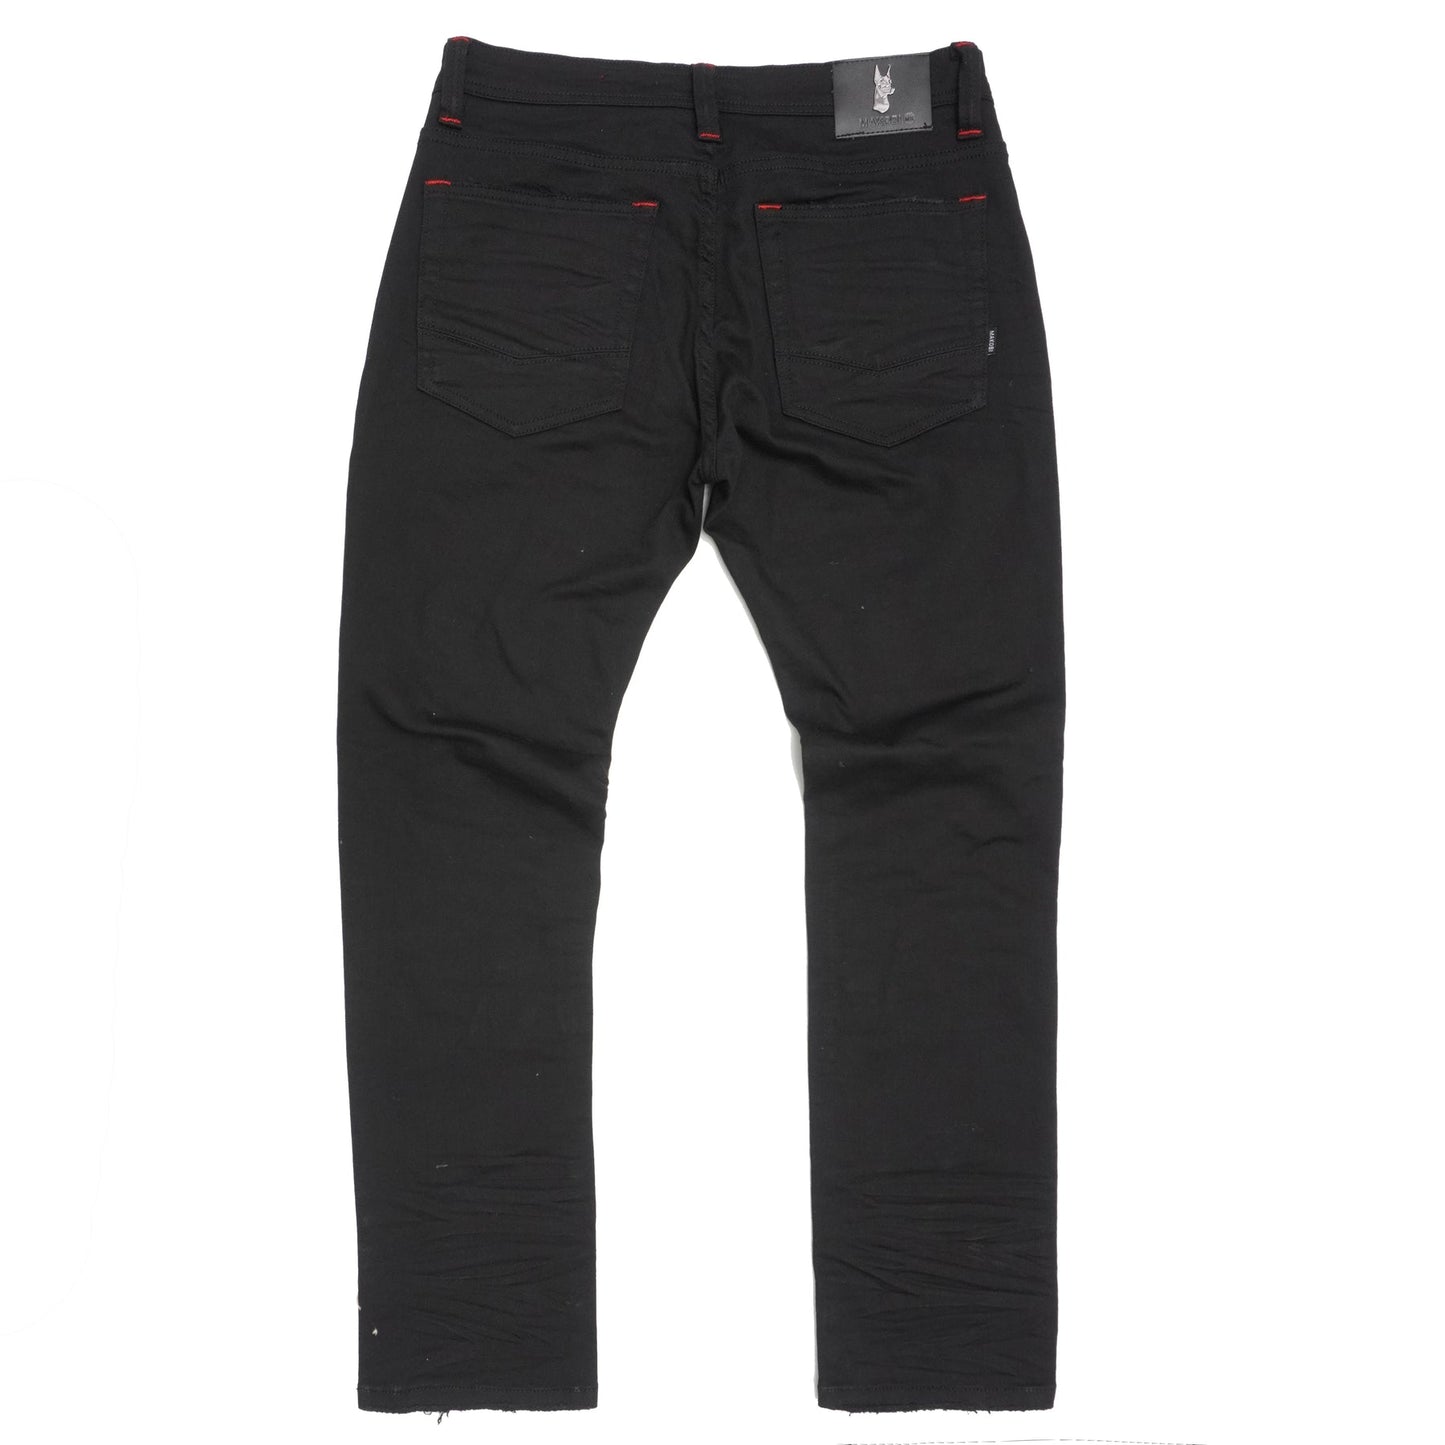 M1773 Makobi Amalfi Denim Jeans With Underlay - Black/Red